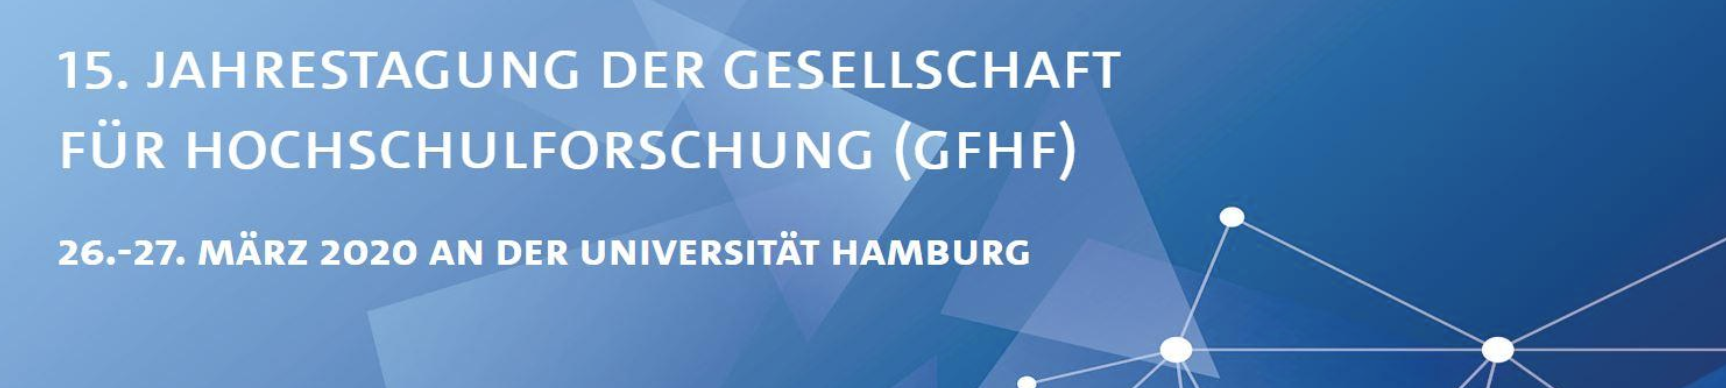 GfHf Online-Conference jetzt online